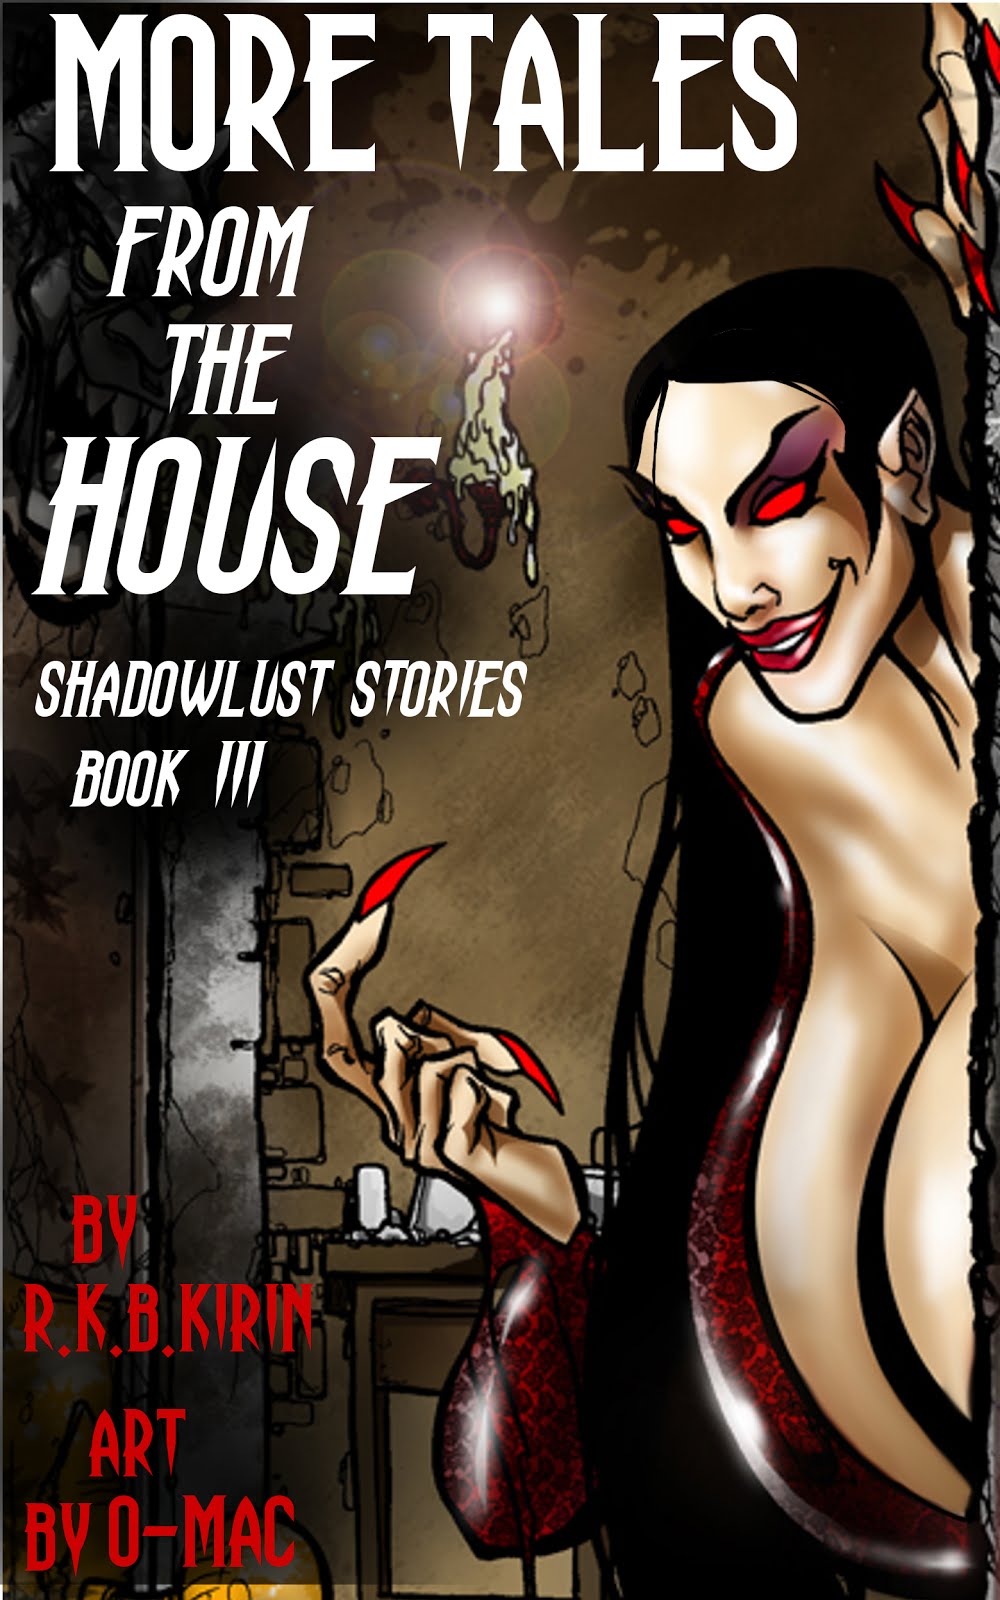 Third book in the Shadowlust series